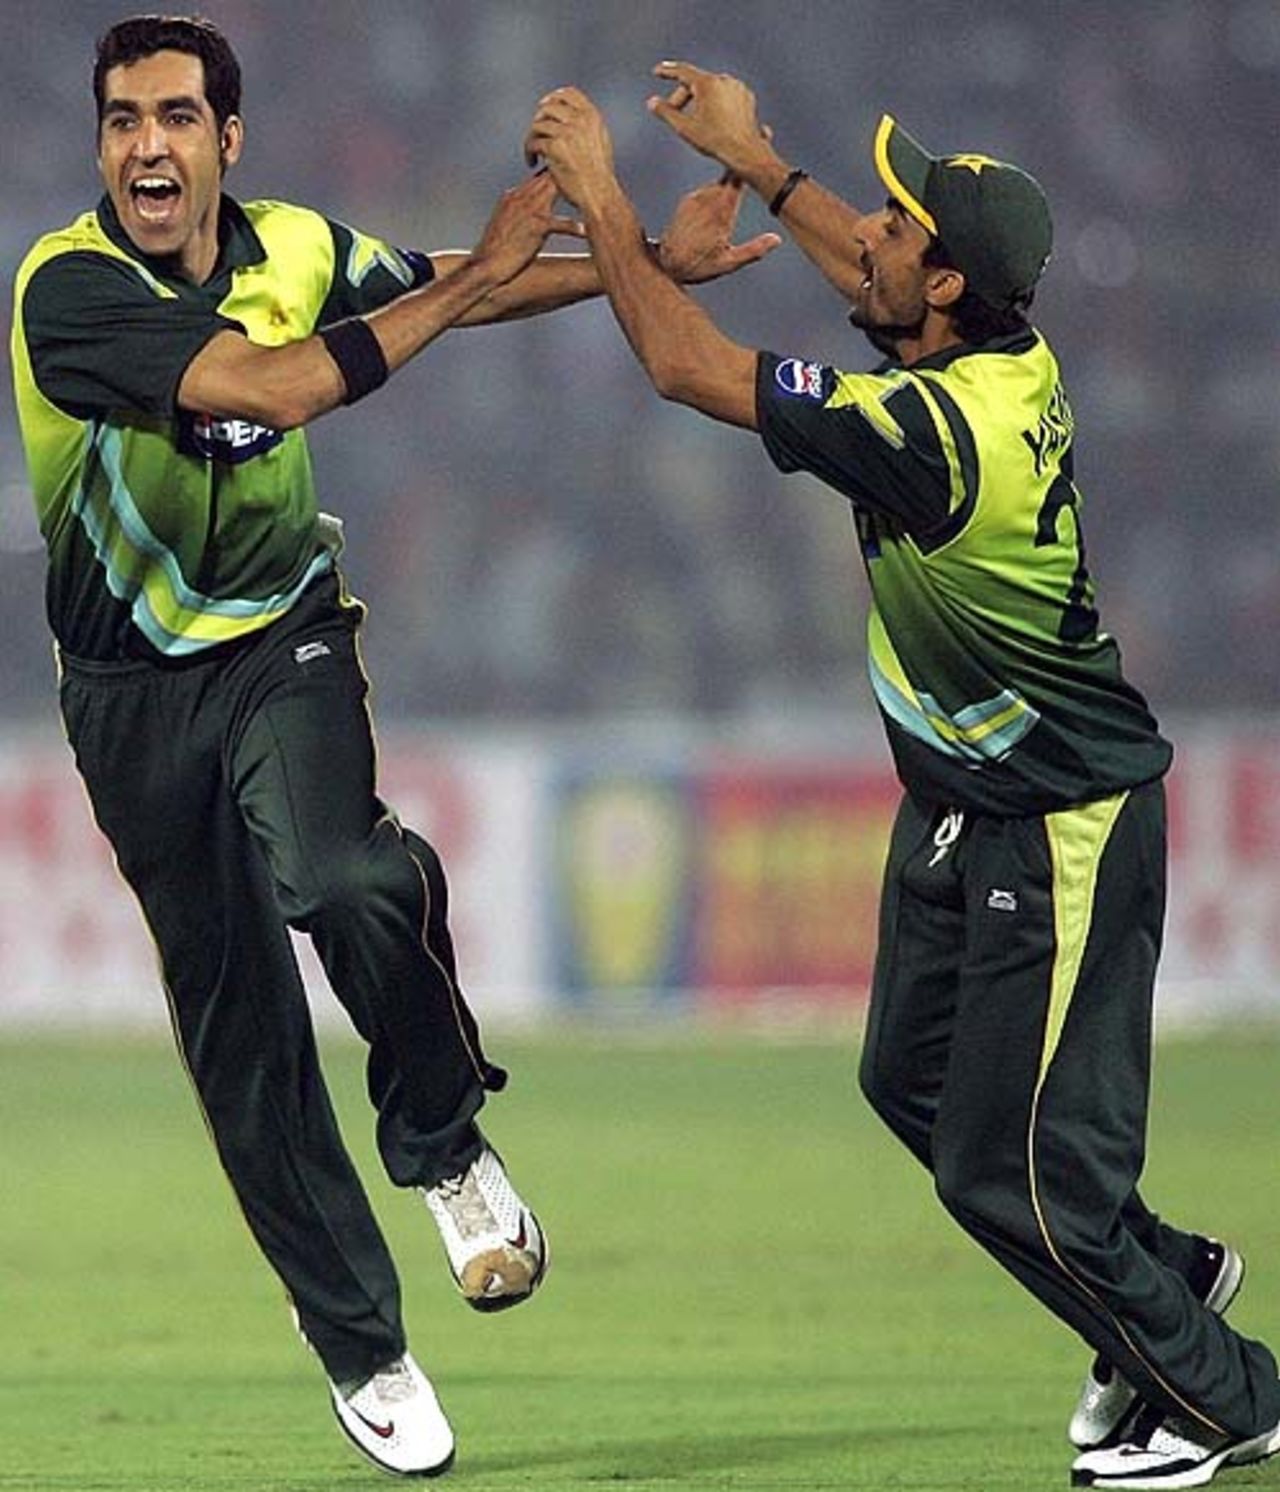 Umar Gul and Yasir Hameed are thrilled at the fall of Yuvraj Singh, India v Pakistan, 5th ODI, Jaipur, November 18, 2007